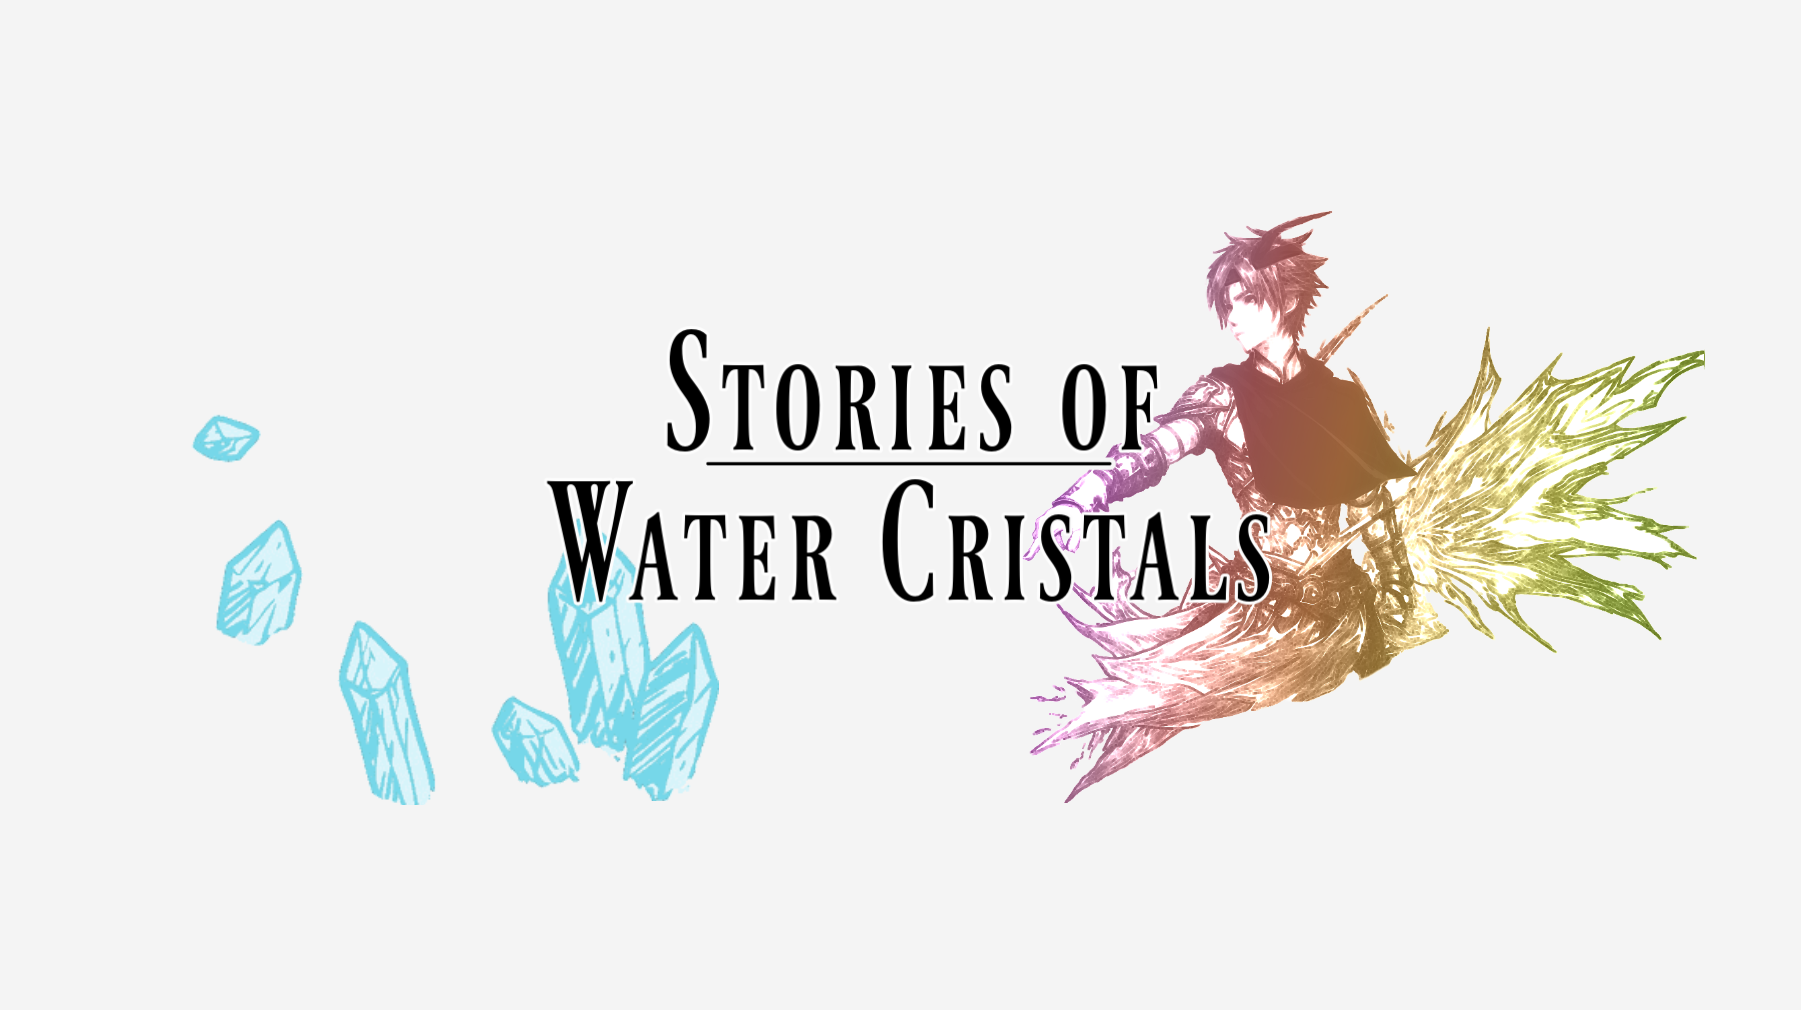 Stories of Water Cristals